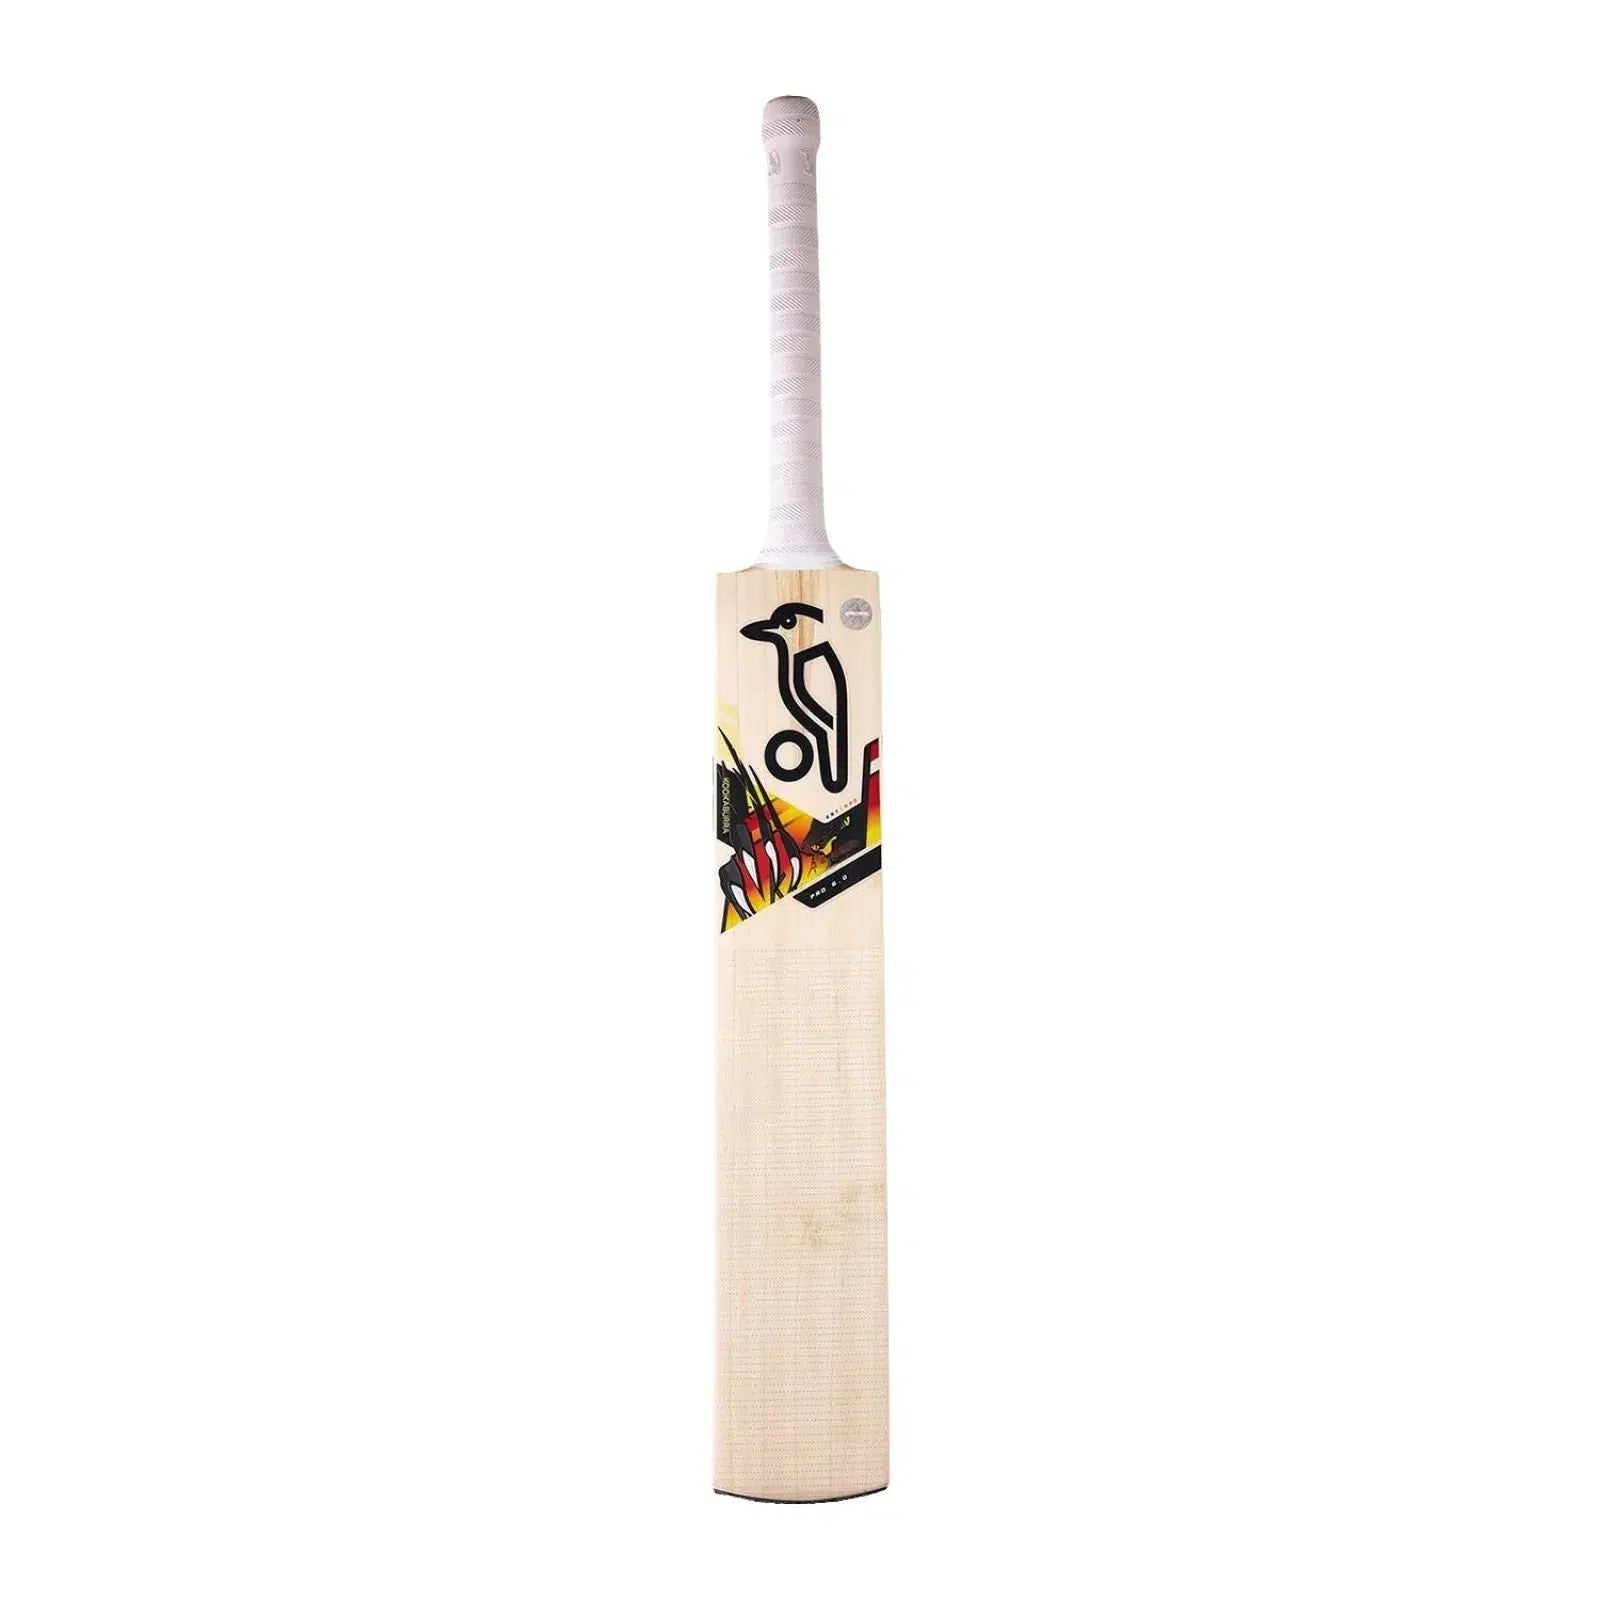 Kookaburra Beast Pro 6.0 Cricket Bat - Size 4